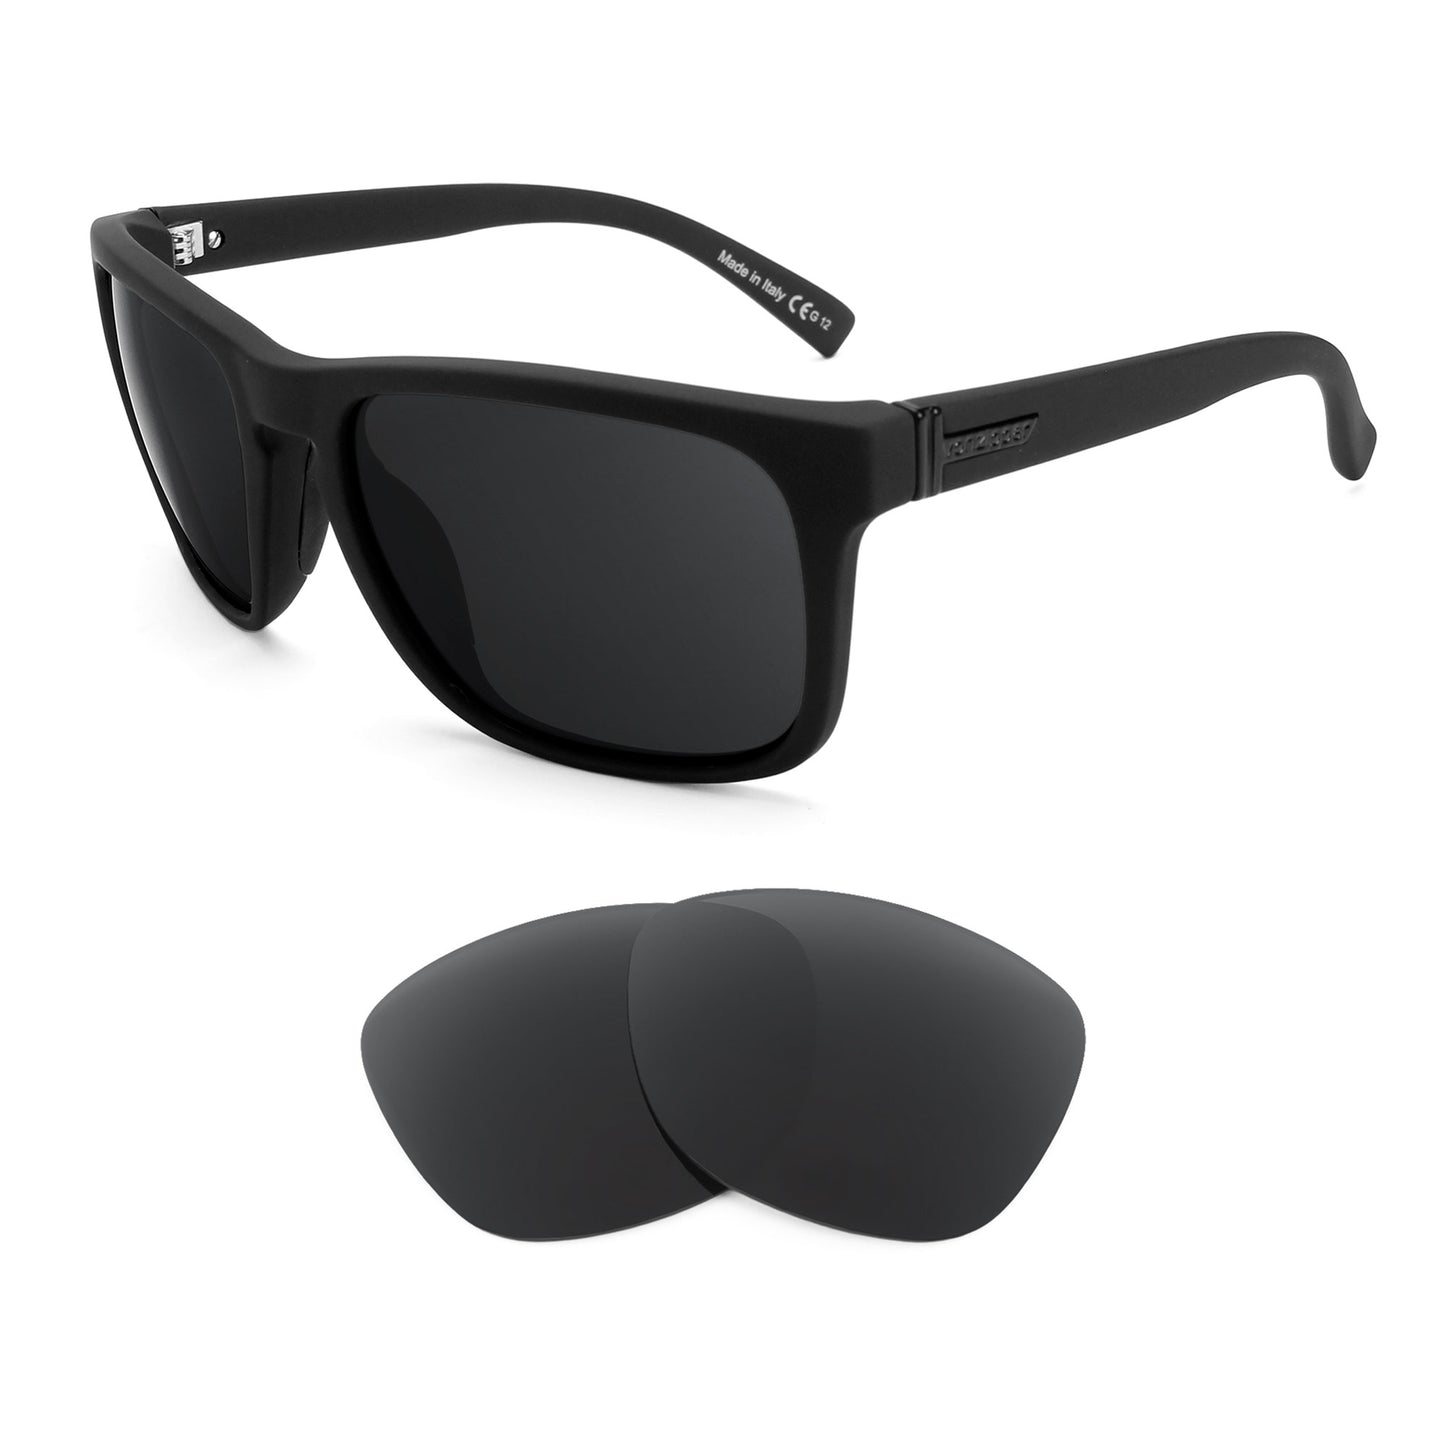 VonZipper Lomax sunglasses with replacement lenses